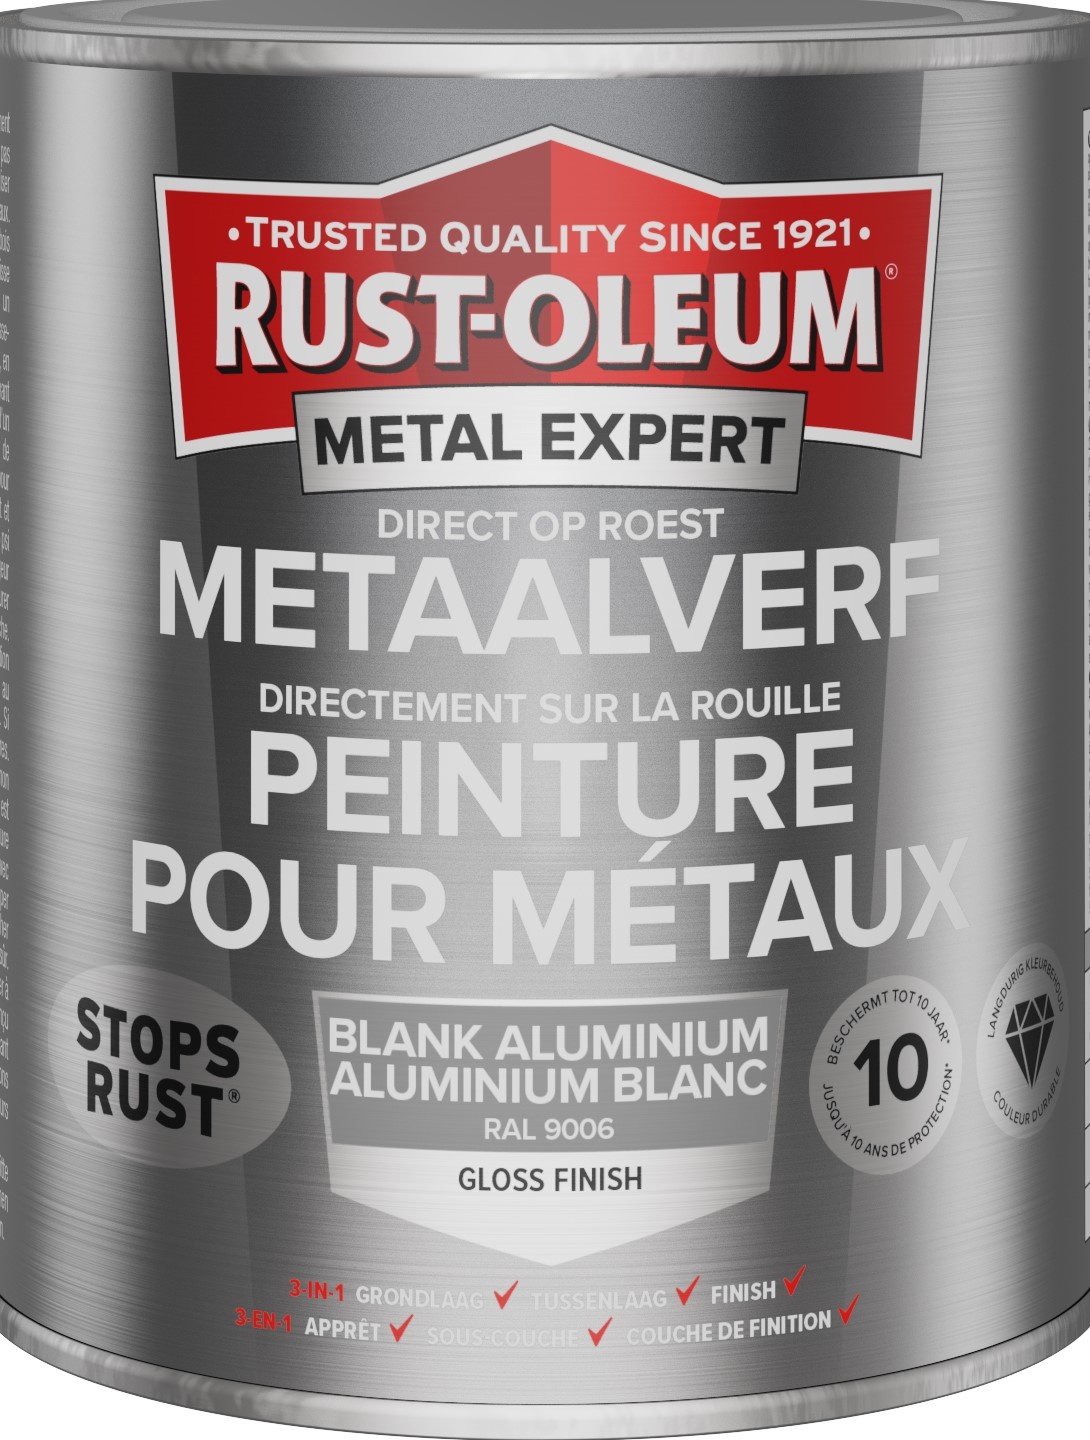 rust-oleum metal expert metaalverf gloss ral 9006 0.4 ltr spuitbus